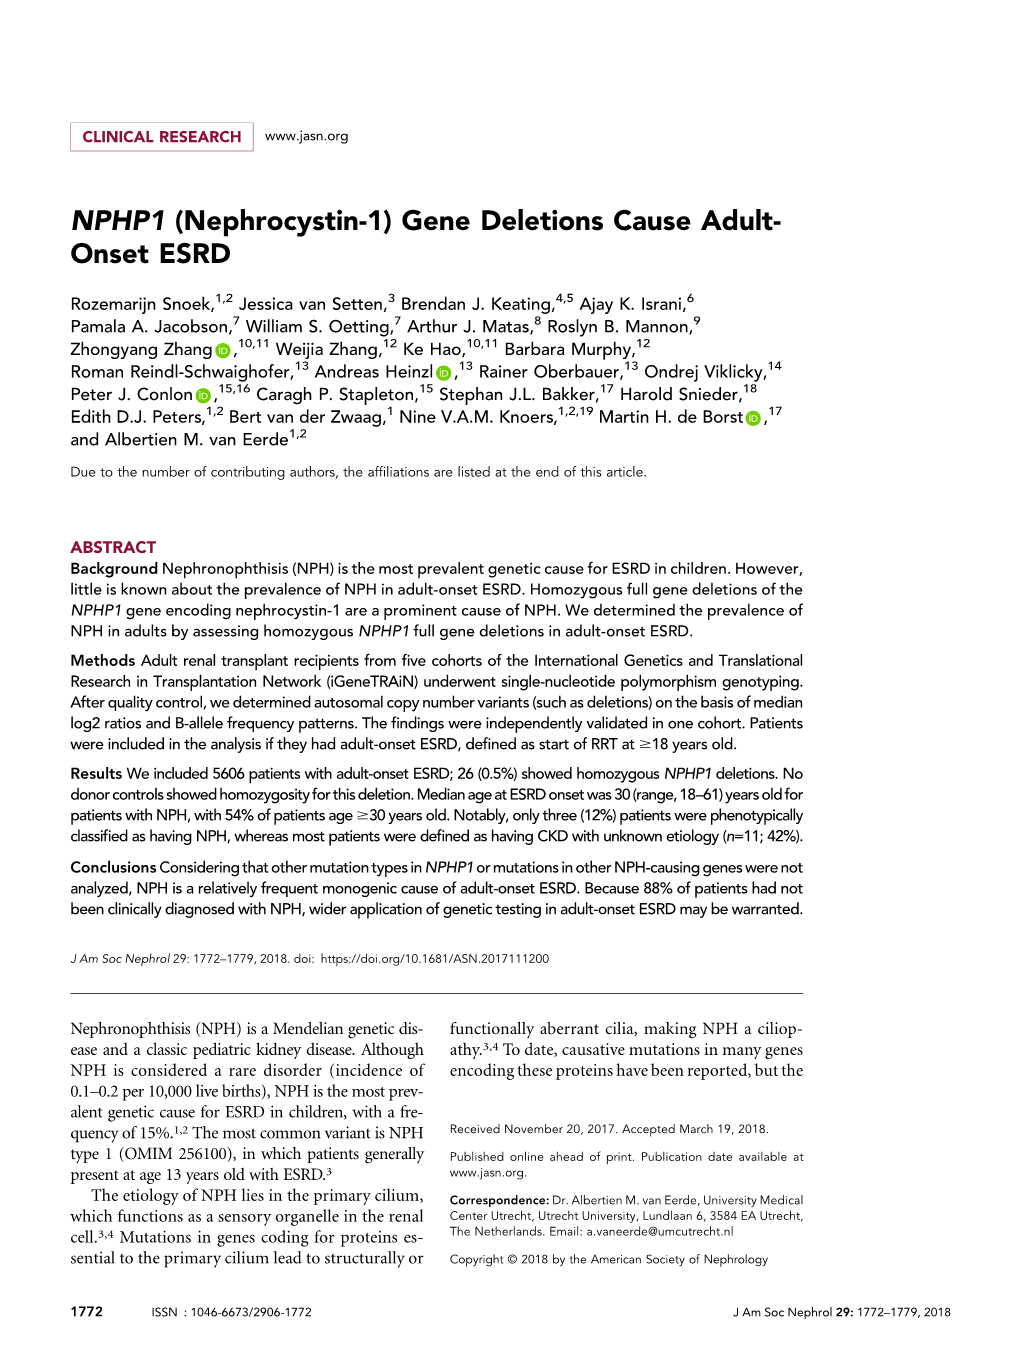 NPHP1 (Nephrocystin-1) Gene Deletions Cause Adult-Onset ESRD